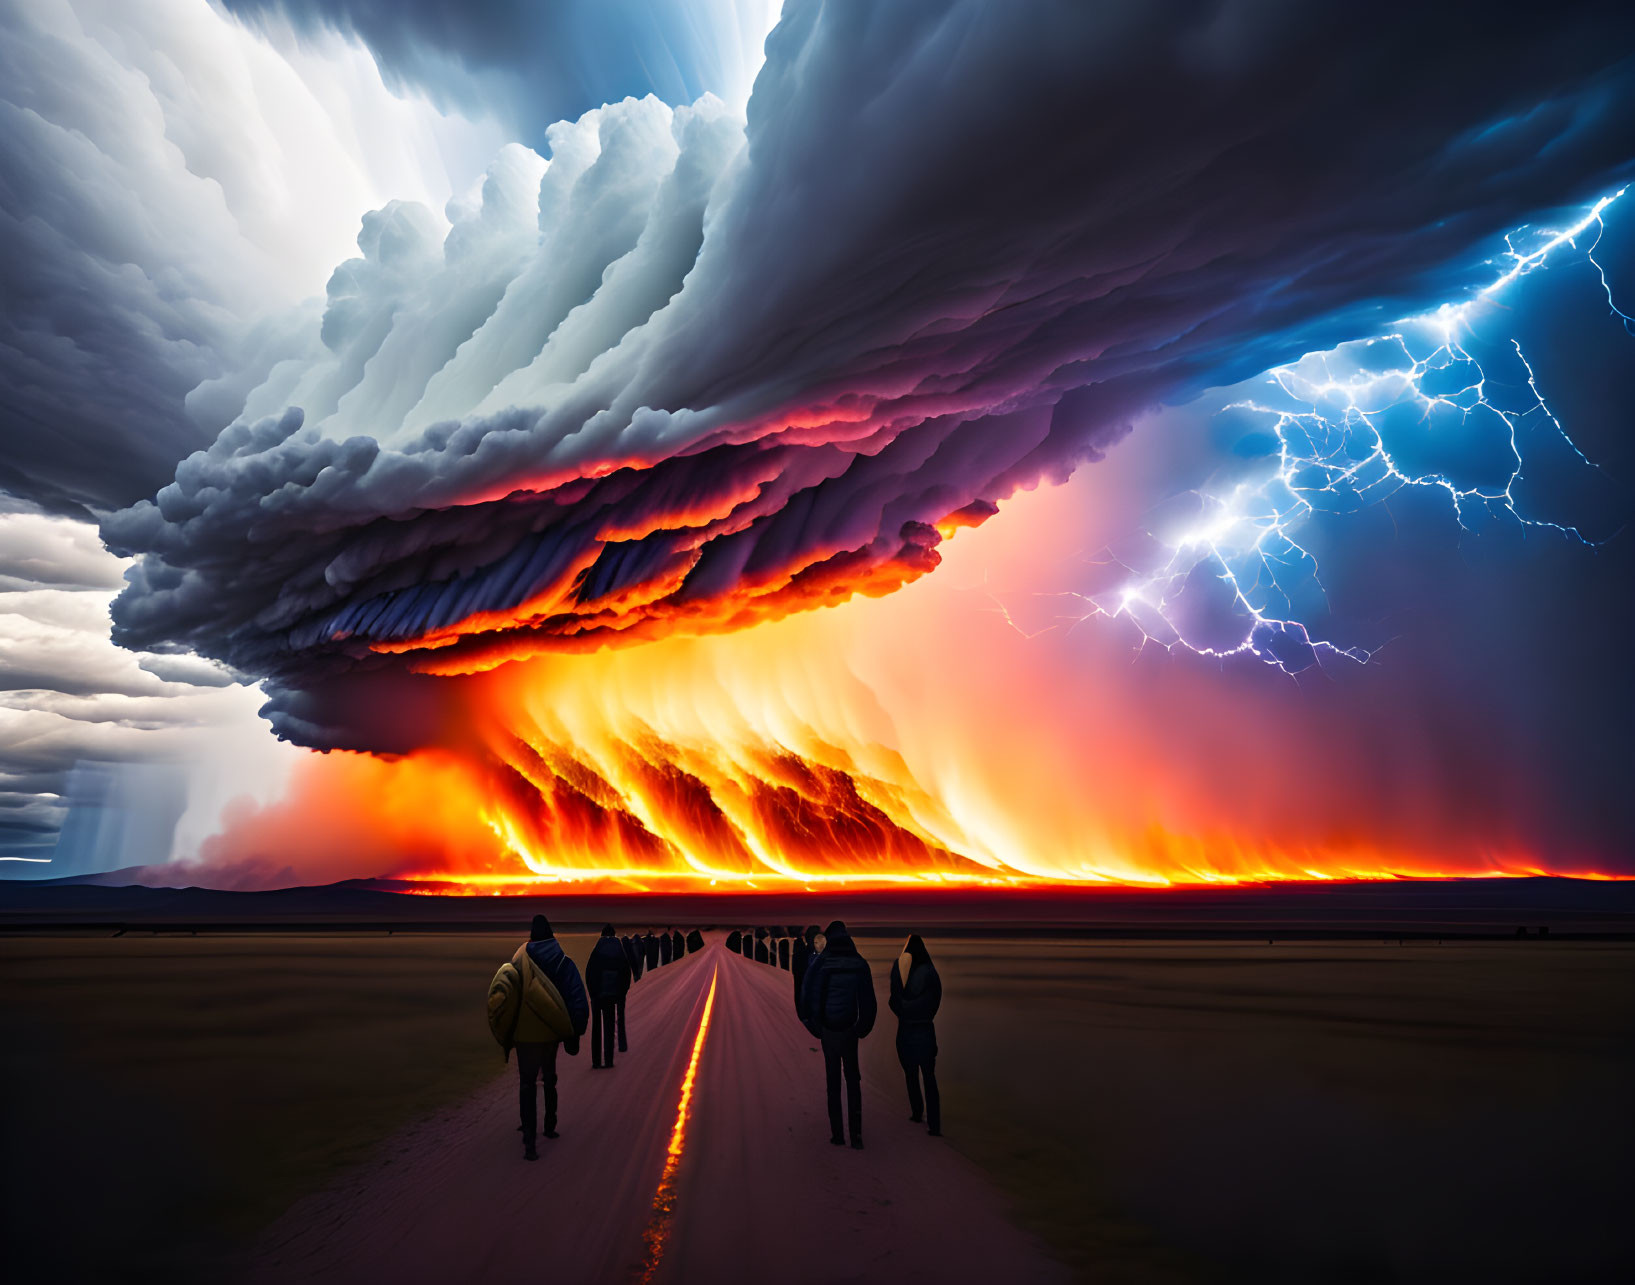 Group of people walking towards dramatic apocalyptic scene